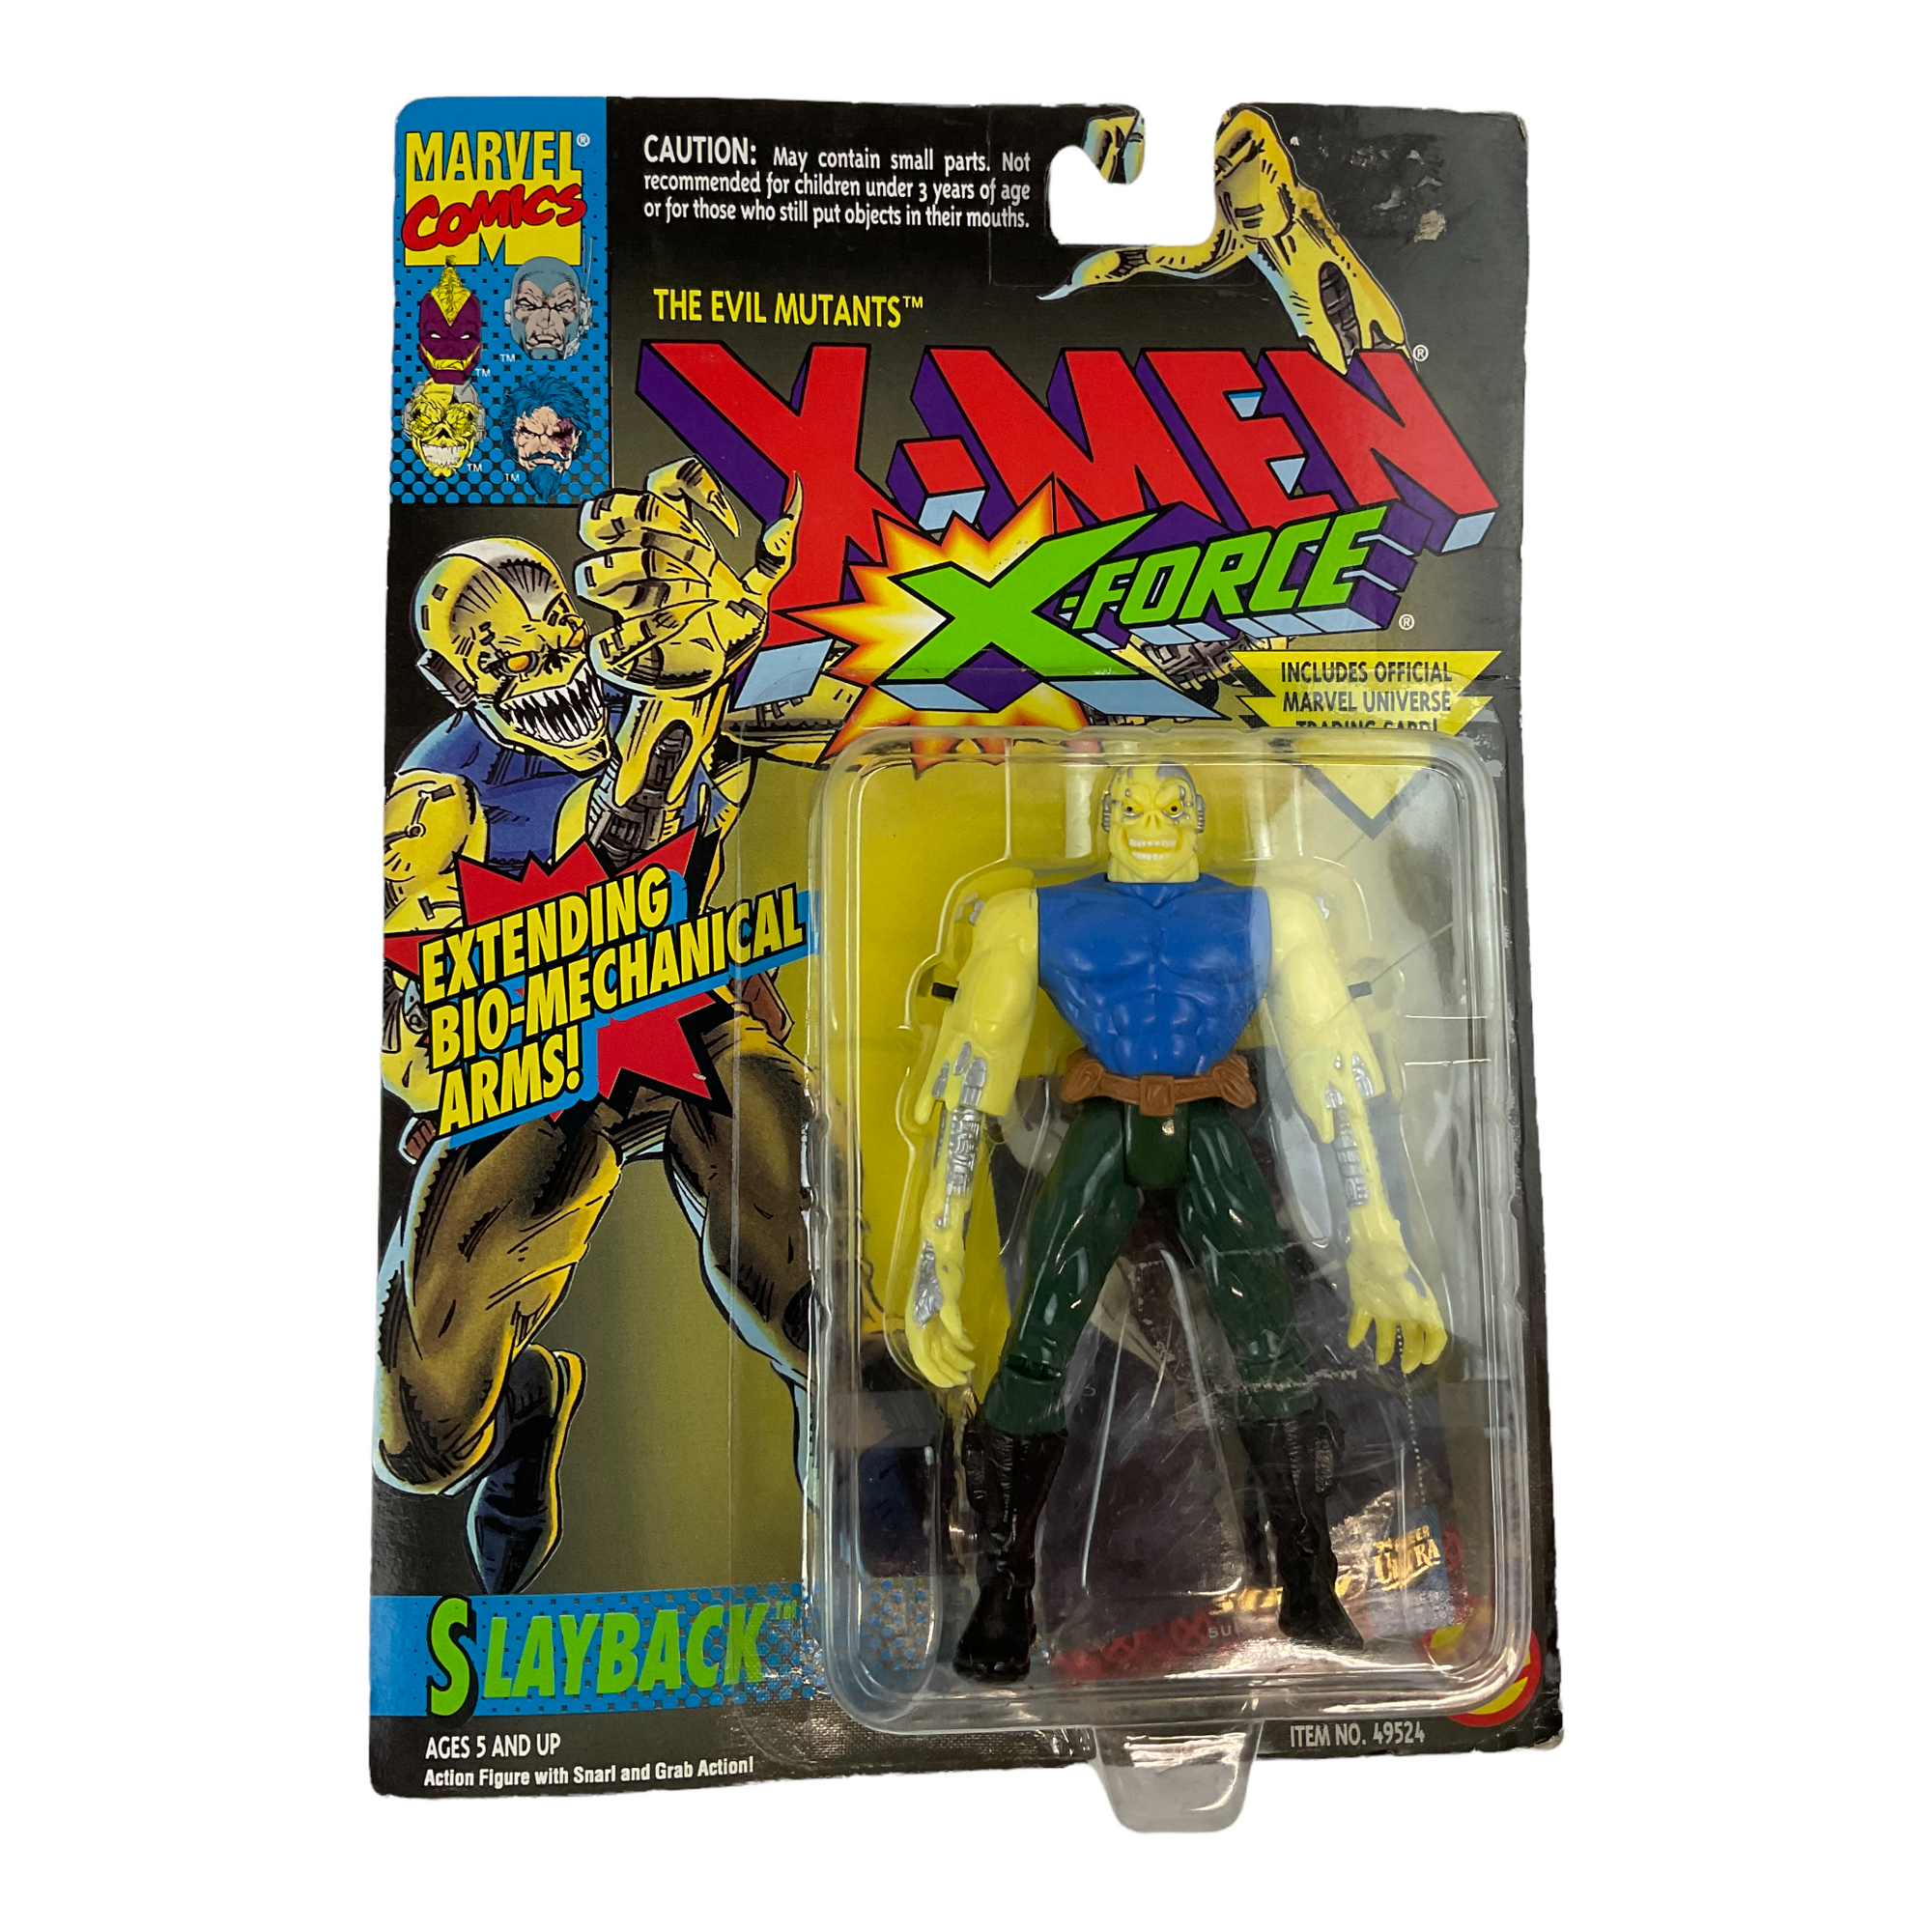 Slayback Action Figure 1994 X-Men X-Force - Evil Mutants w/ Snarl & Grab Action Toy